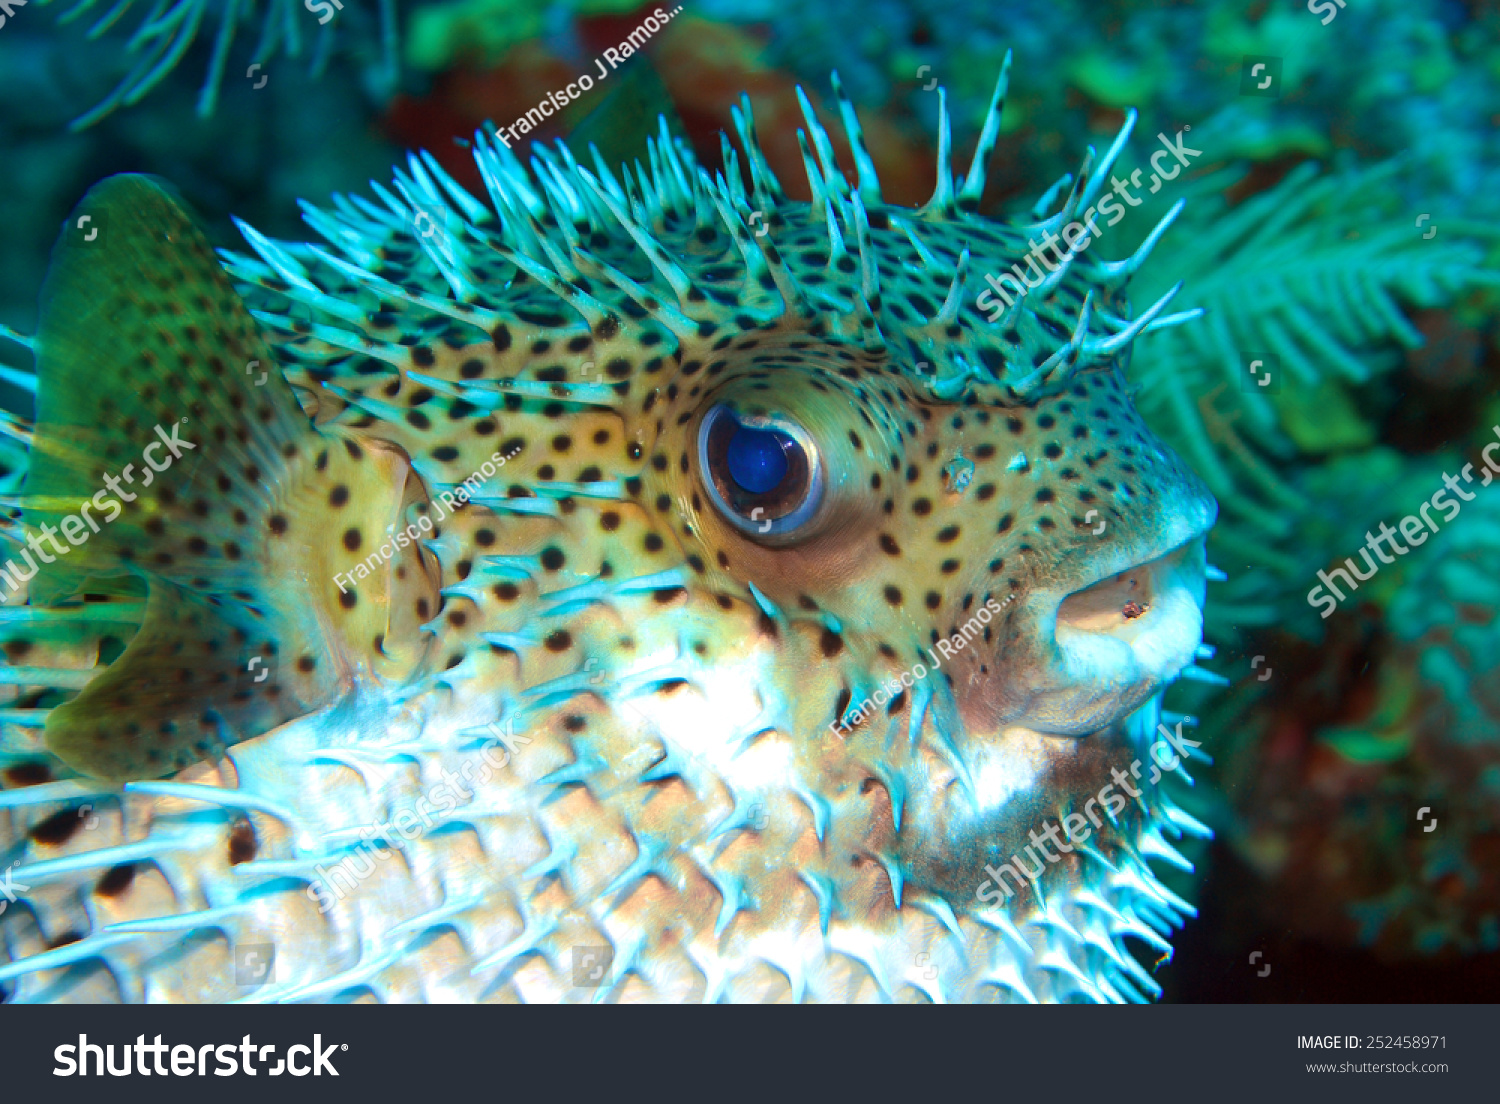 White Belly Blowfish Stock Photo 252458971 - Shutterstock